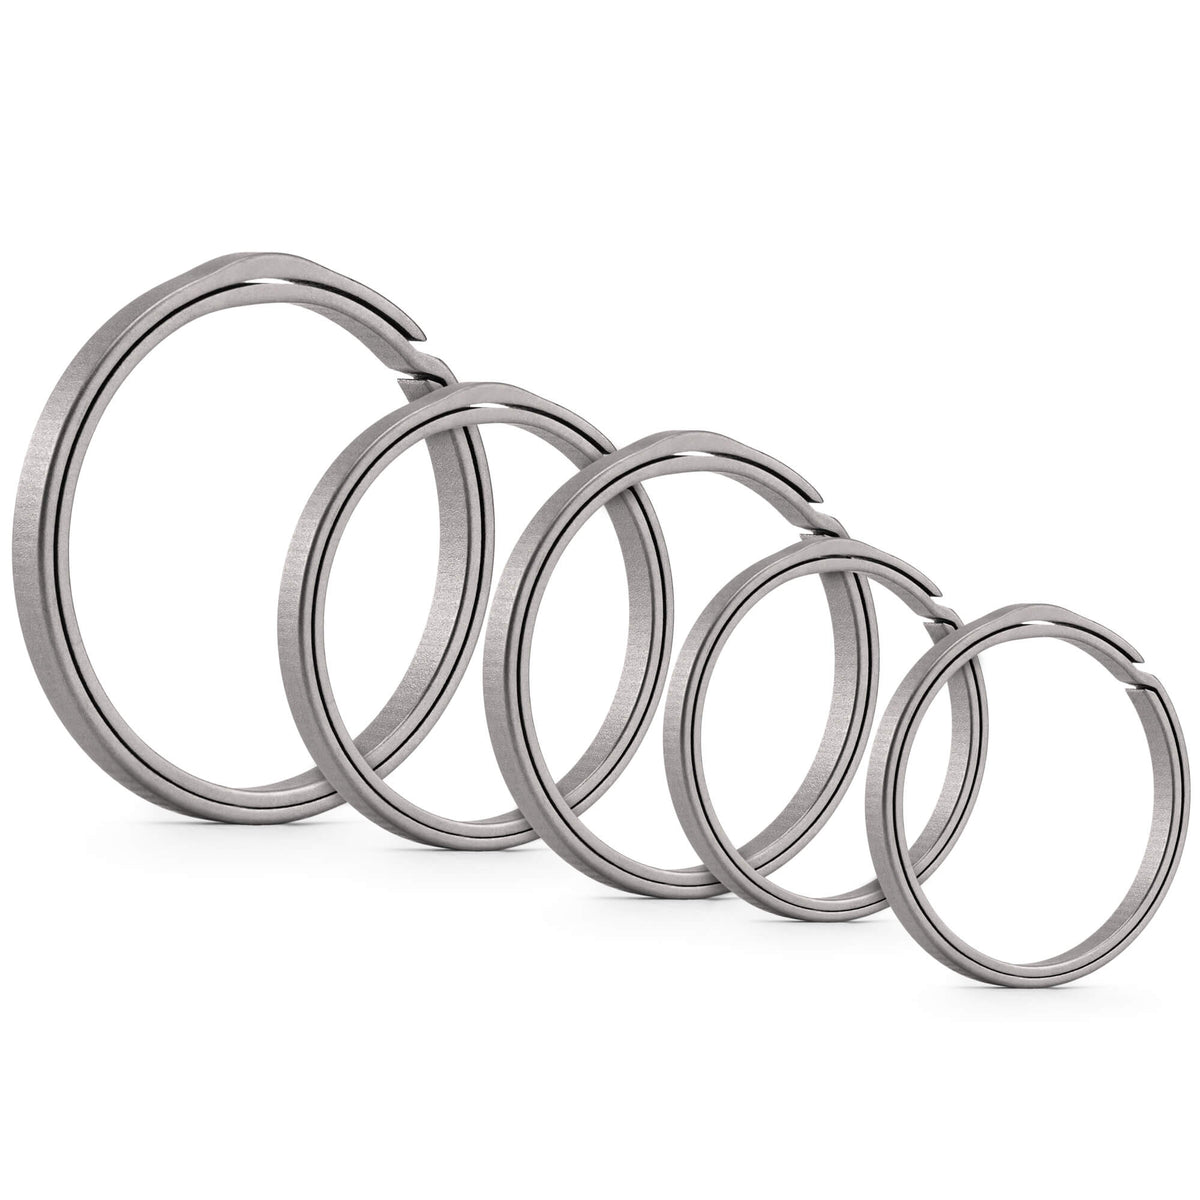 KA20 Titanium Alloy Key Ring Set(1l+2m+2s)